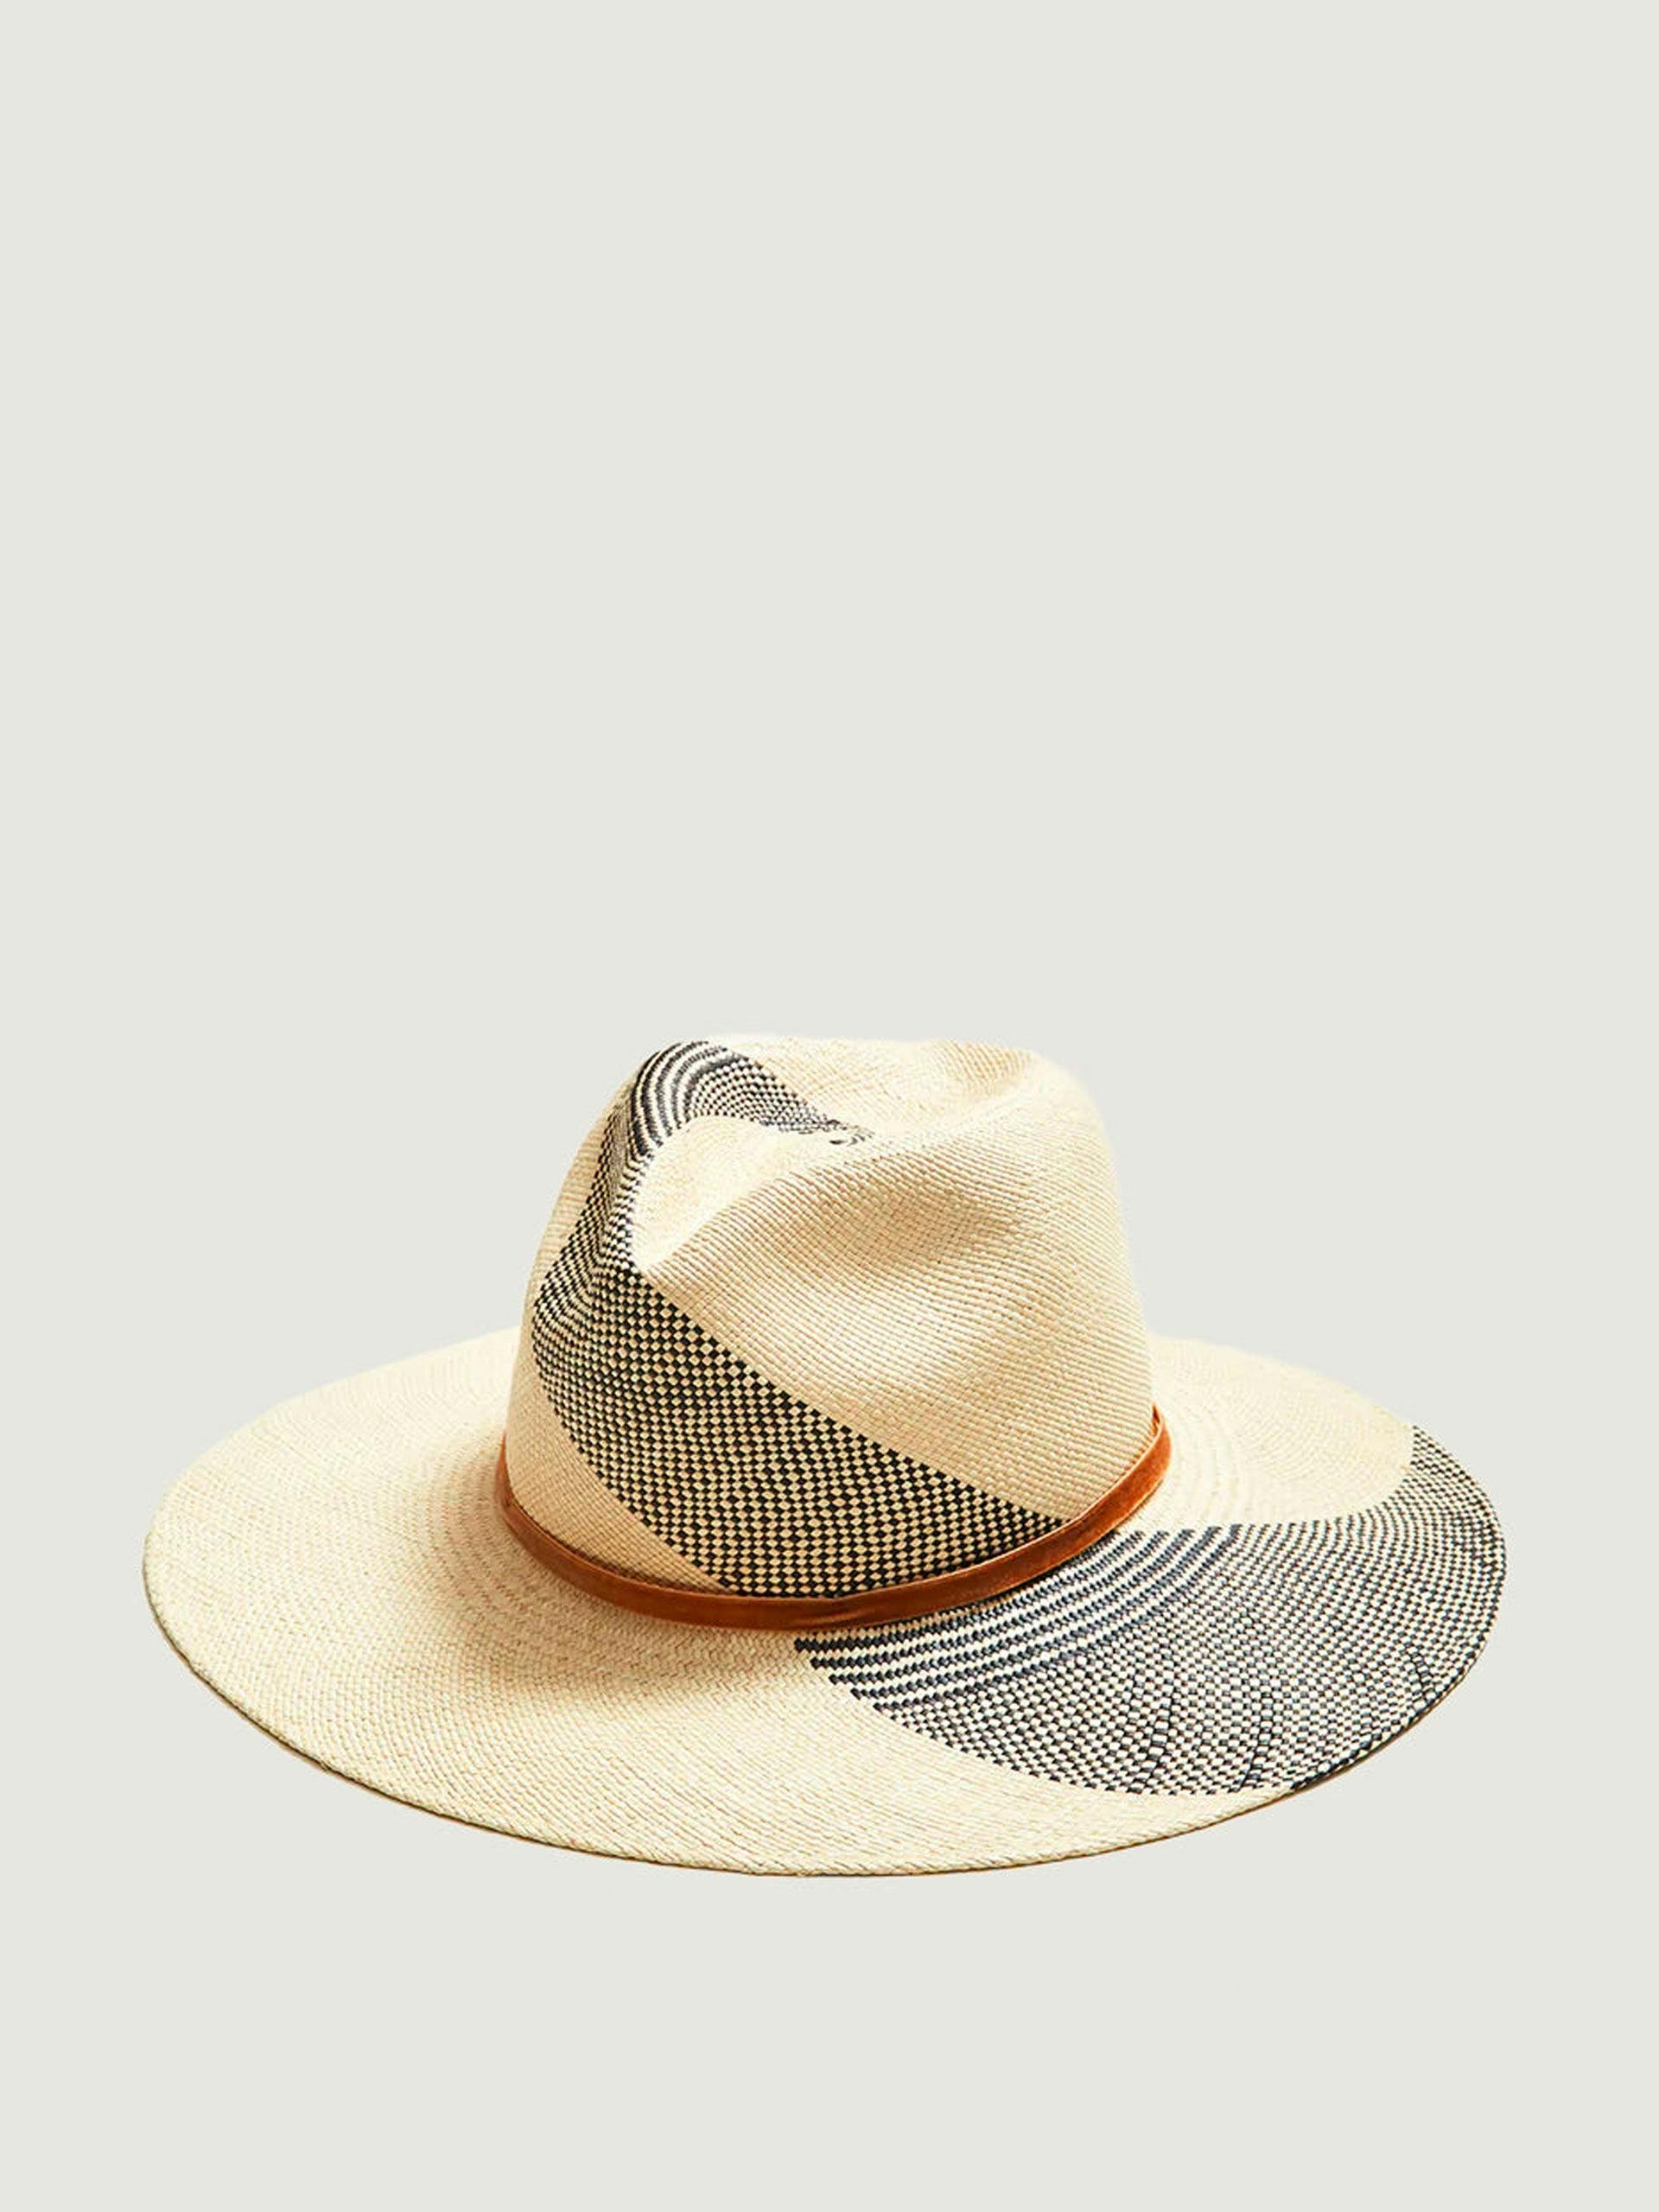 Straw hat with stripes